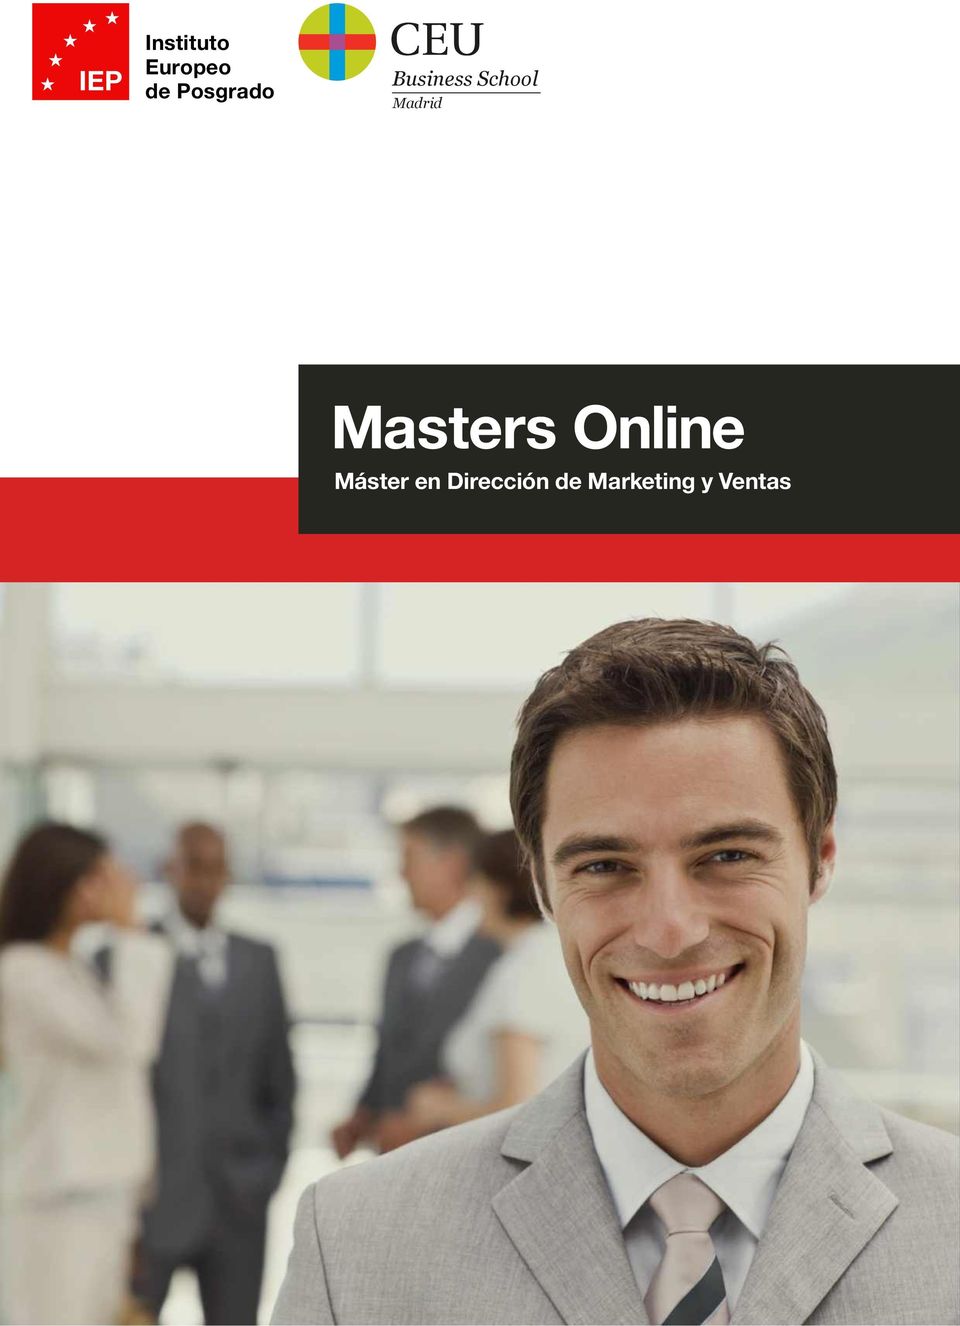 Madrid Masters Online